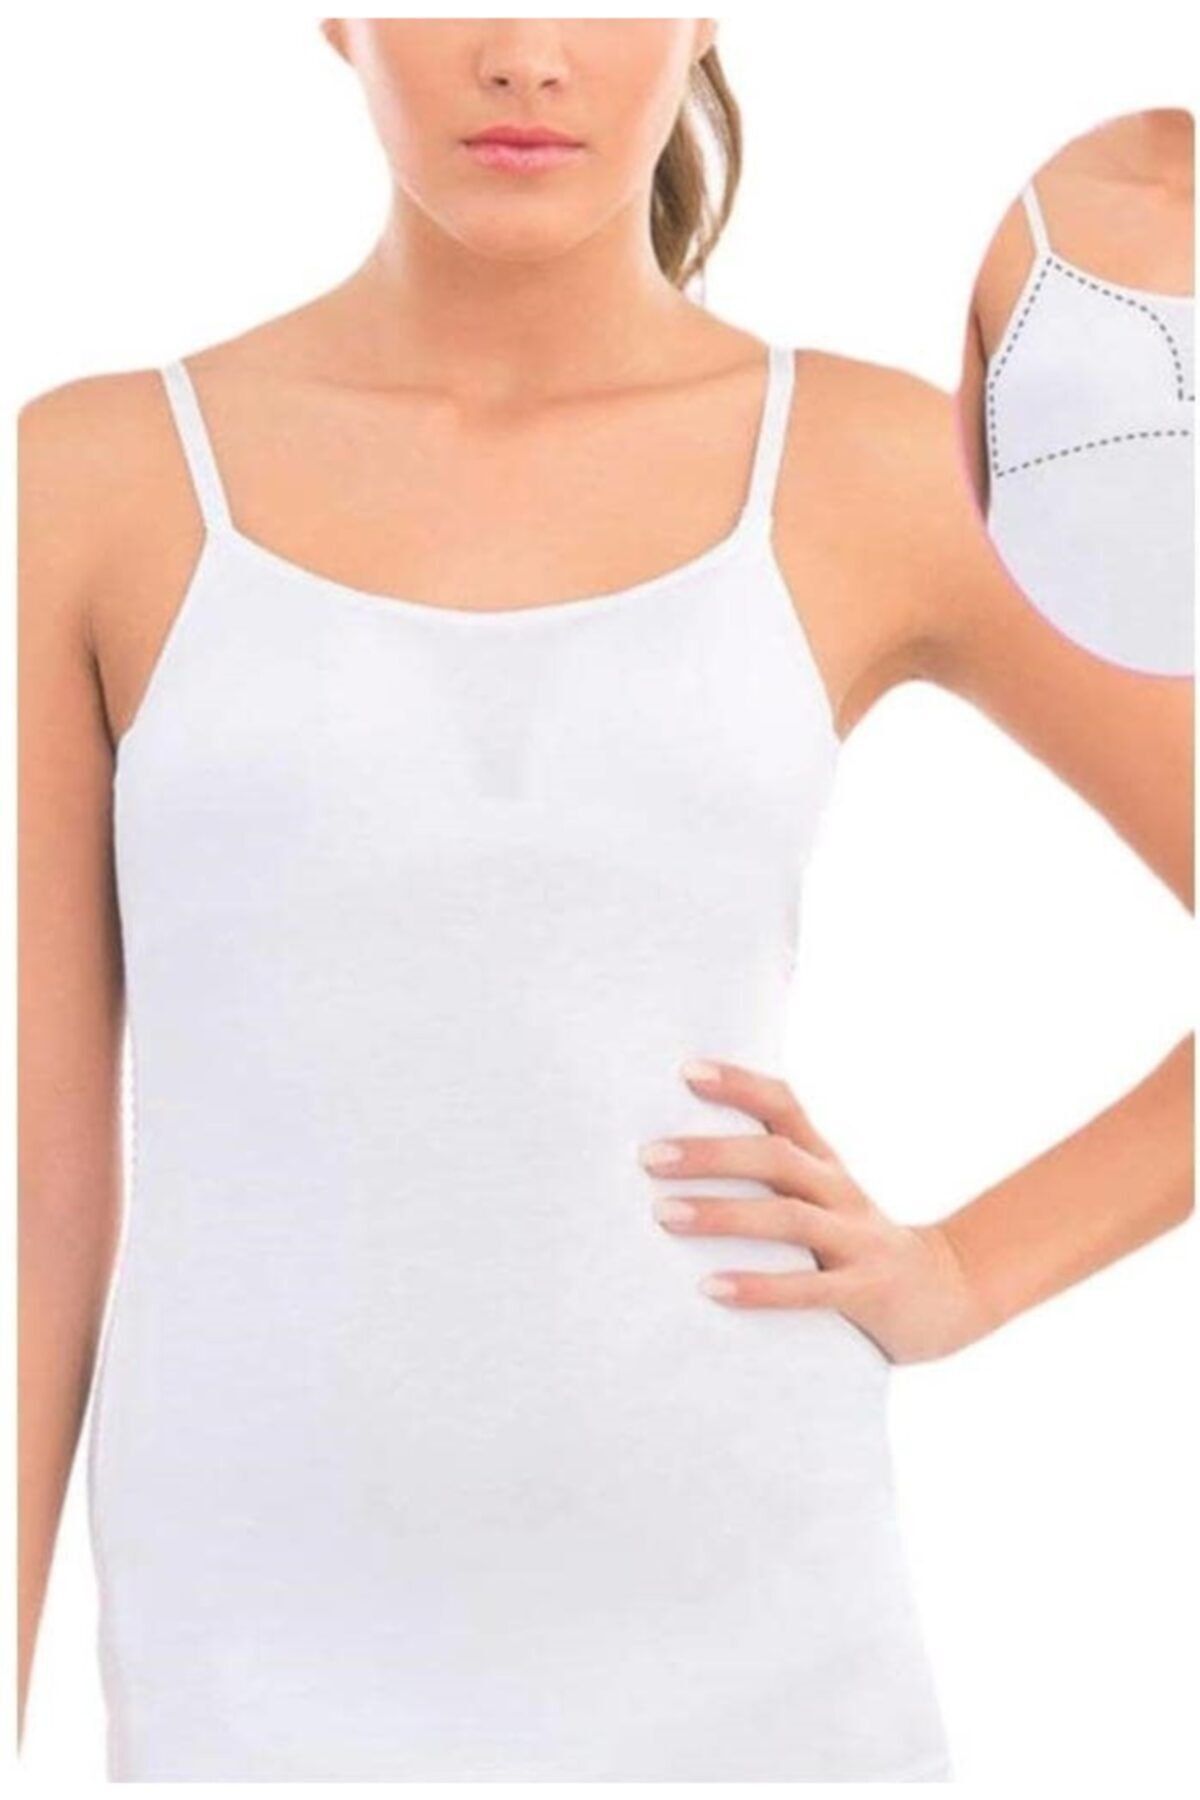 by HW Women's White Comfortable Bra Covered Modal Thread Strap